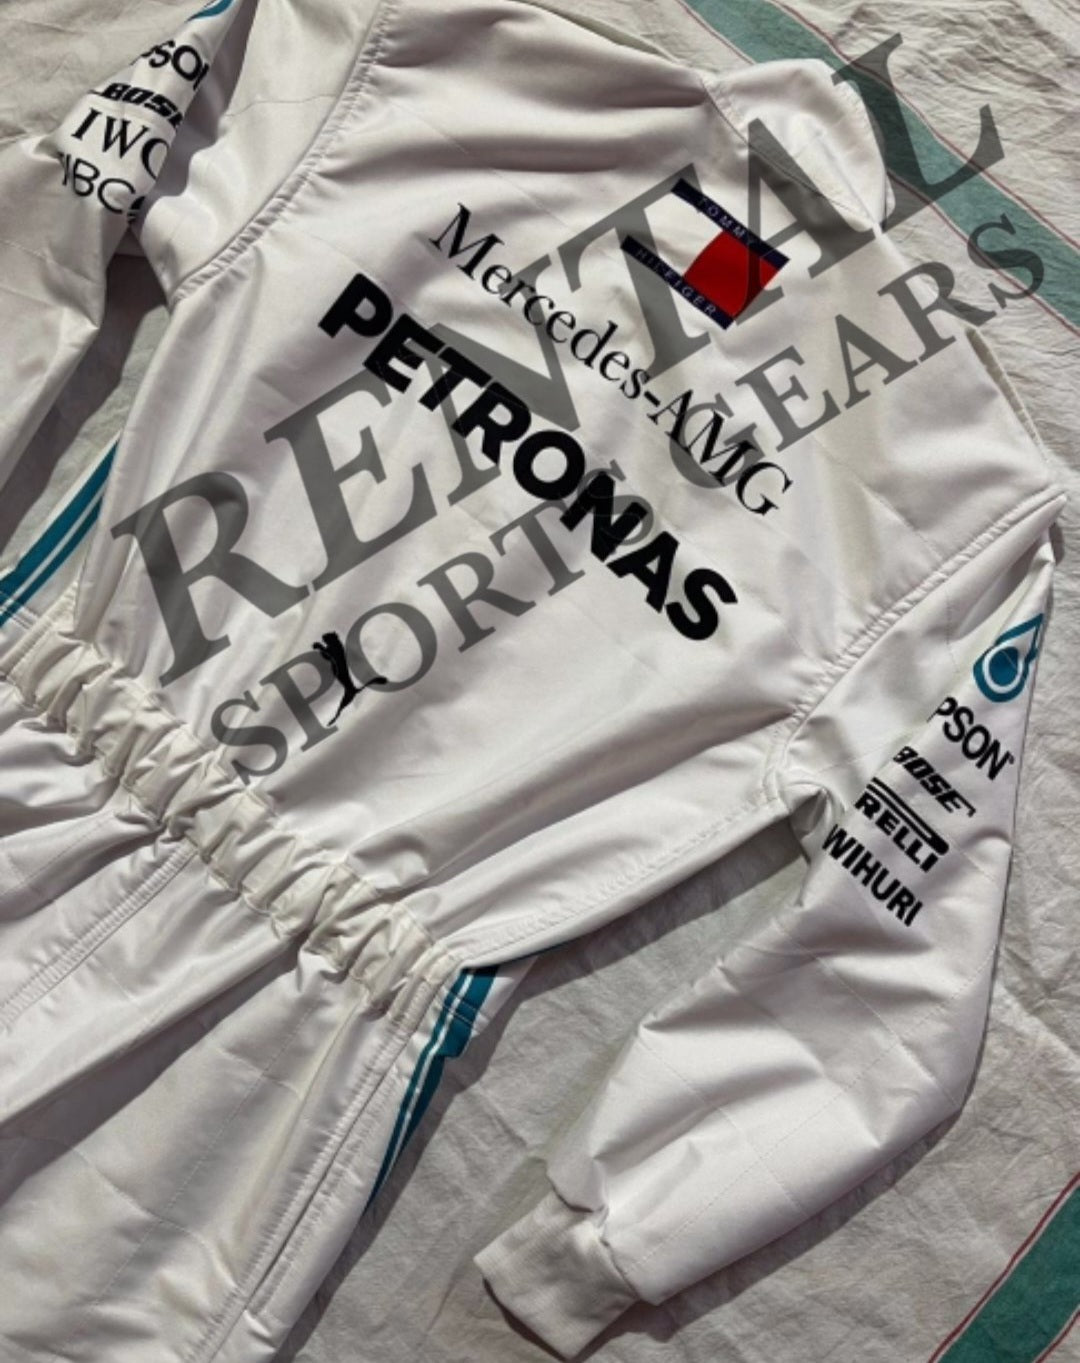 Lewis Hamilton 2018 Replica Racing Suit F1 Mercedes AMG Petronas